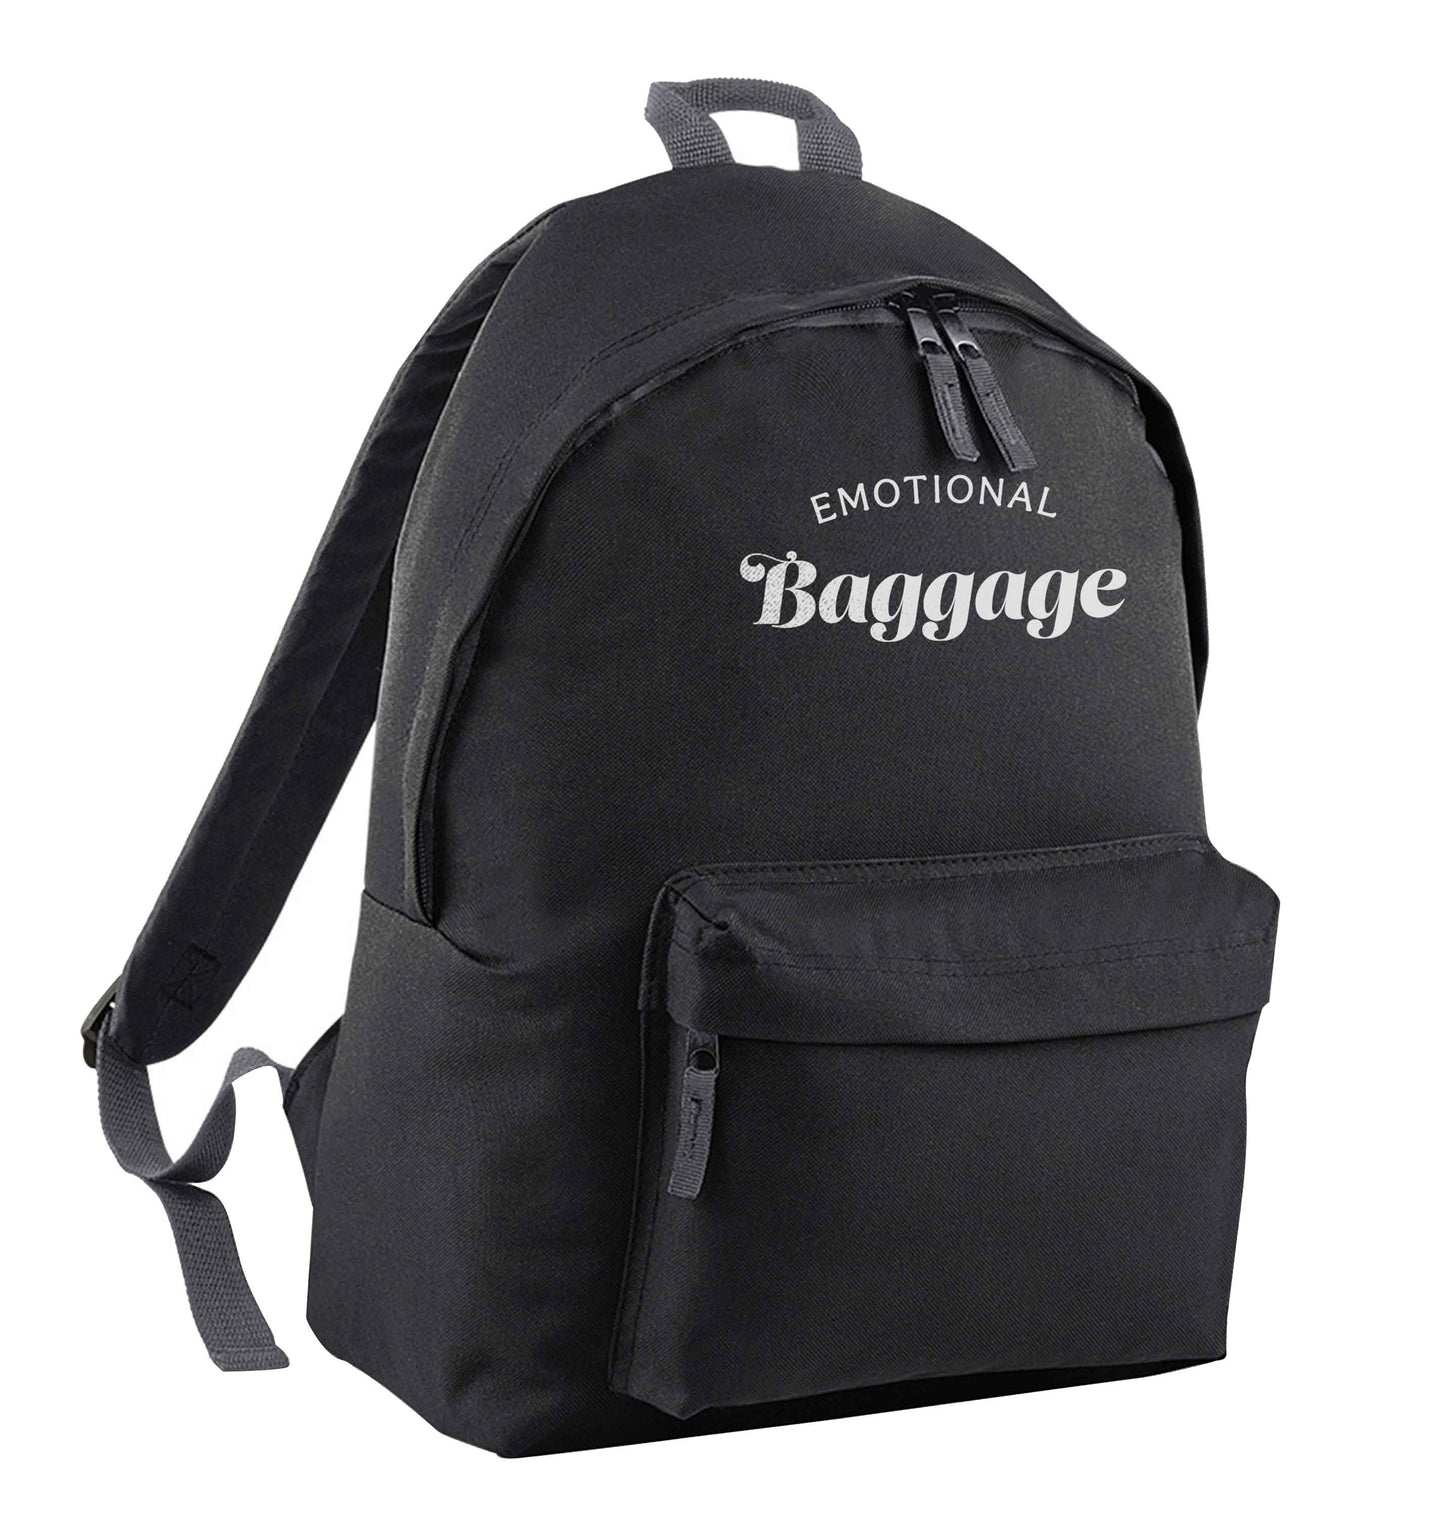 Emotional baggage black adults backpack